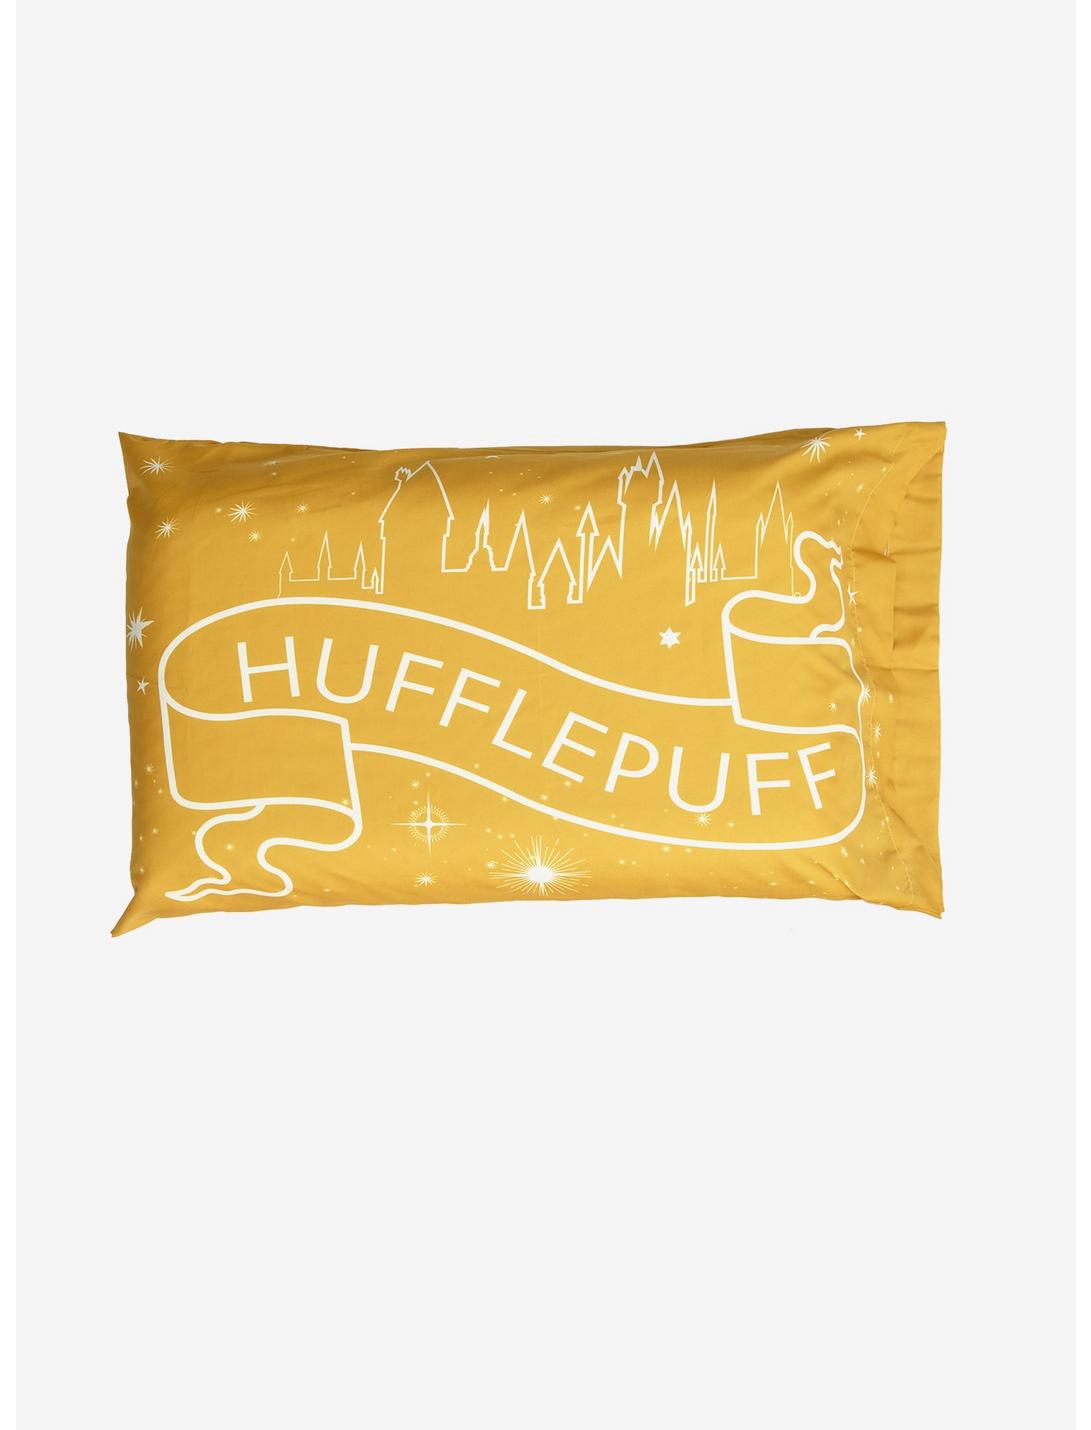 Harry Potter Hufflepuff Celestial Pillowcase Set, , hi-res